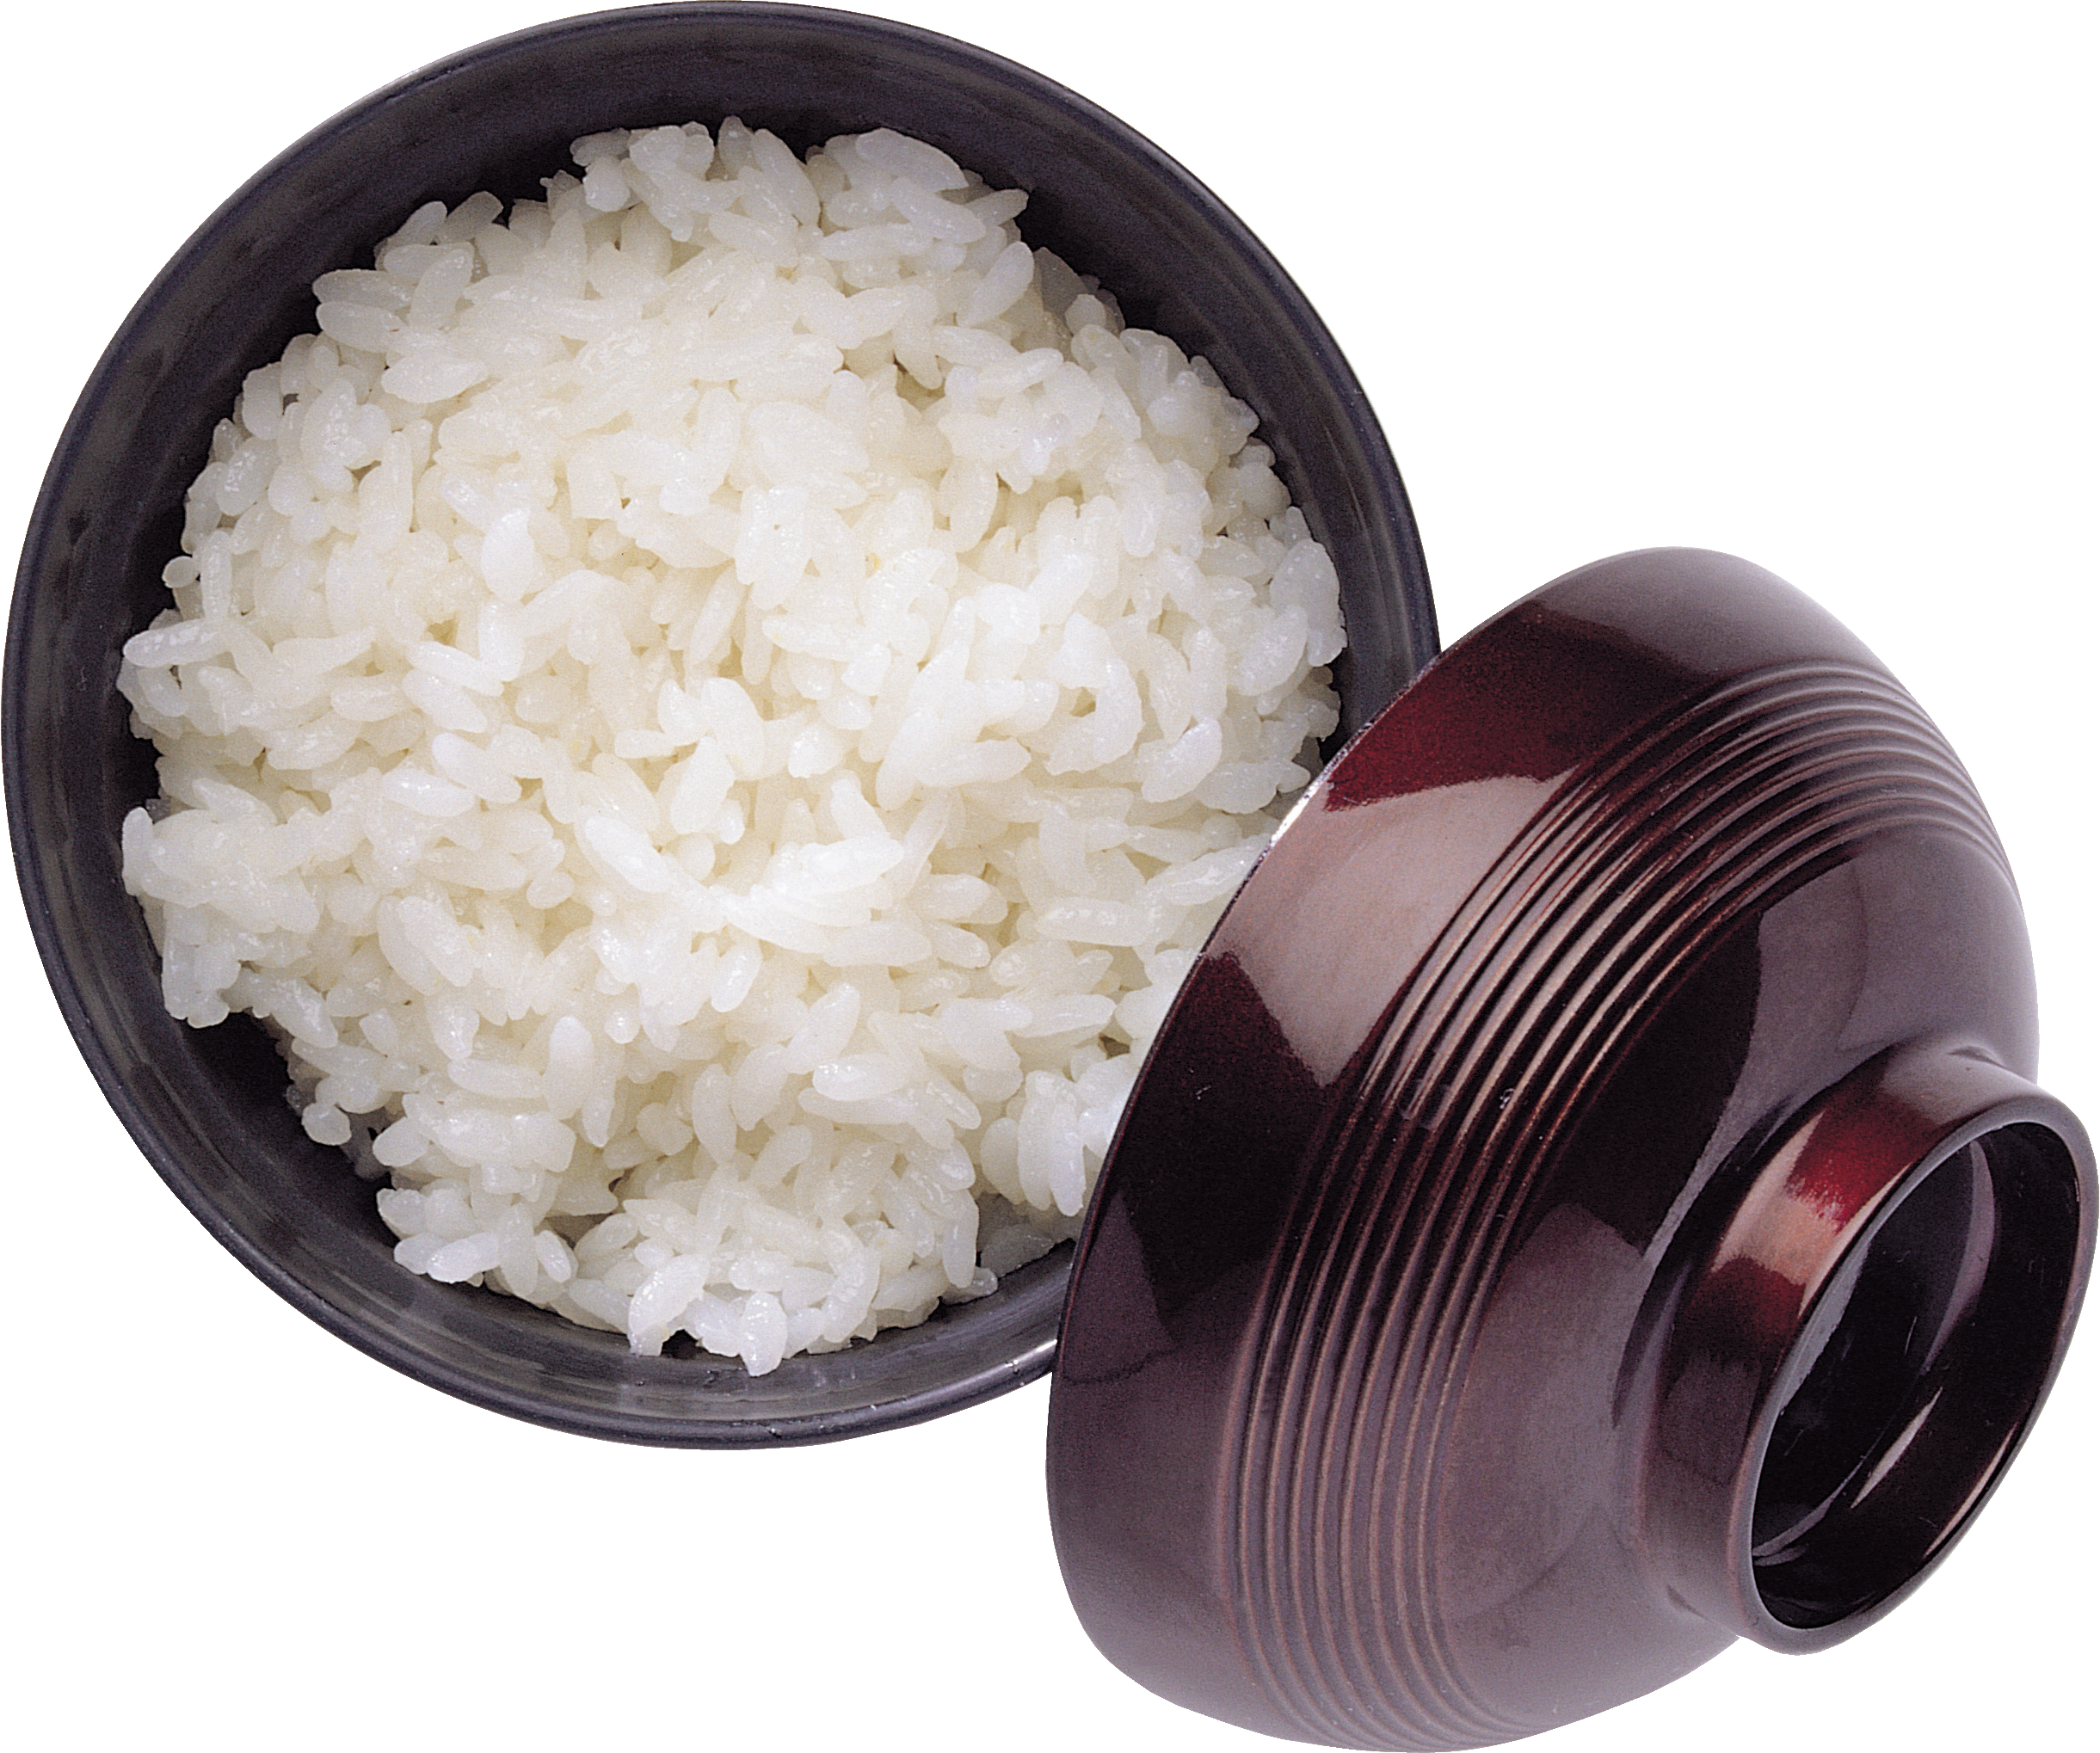 Bir kase pirinç